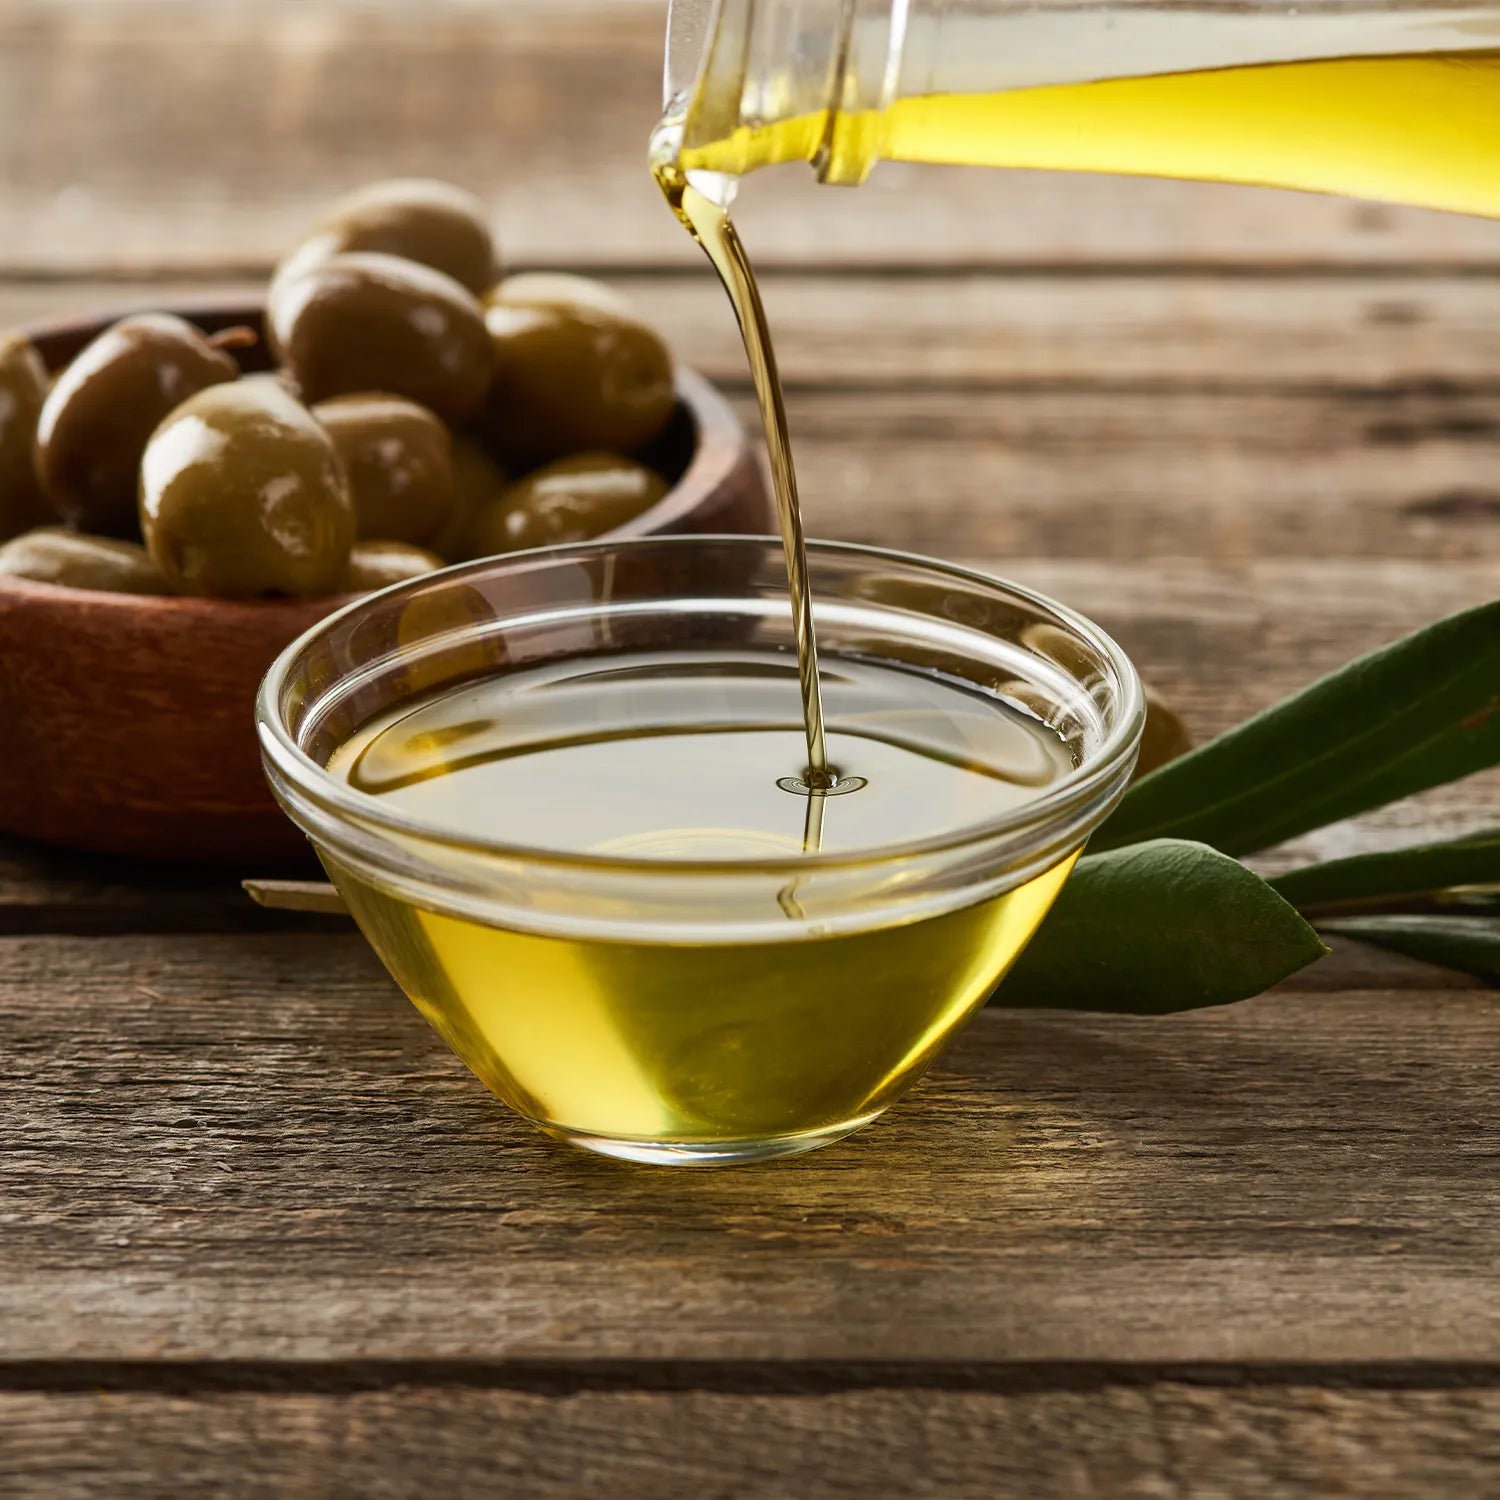 Ingredient in Seek Bamboo Shampoo Bar - Olive Oil